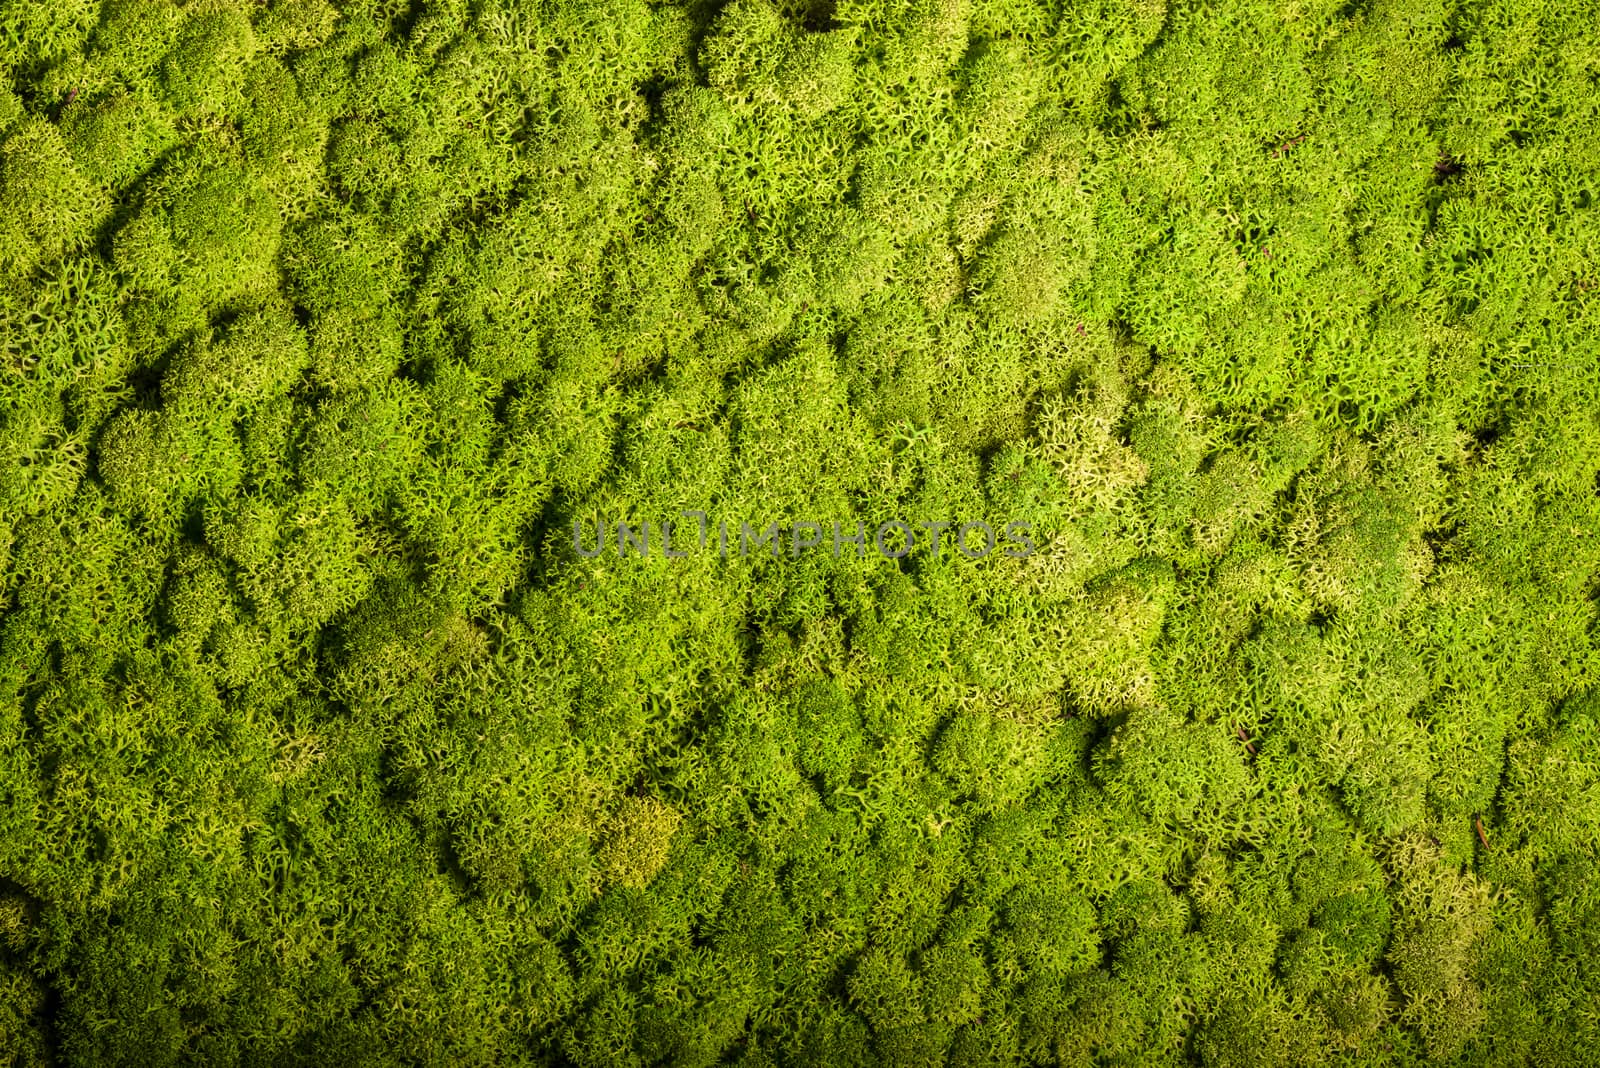 Reindeer moss wall, green wall decoration, lichen Cladonia rangi by asafaric